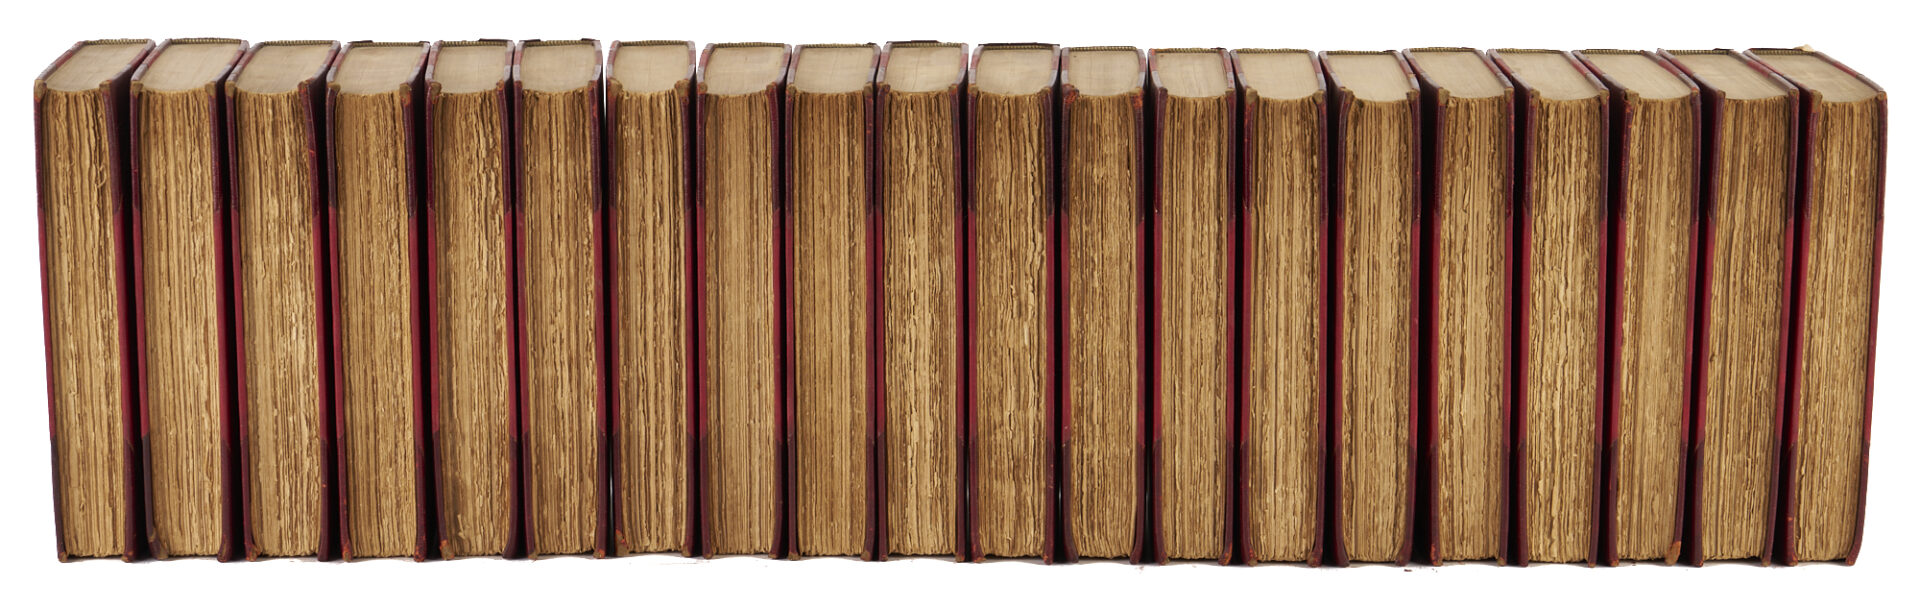 Lot 873: Works of Benjamin Disraeli, 20 Volumes, Leatherbound Primrose Edition